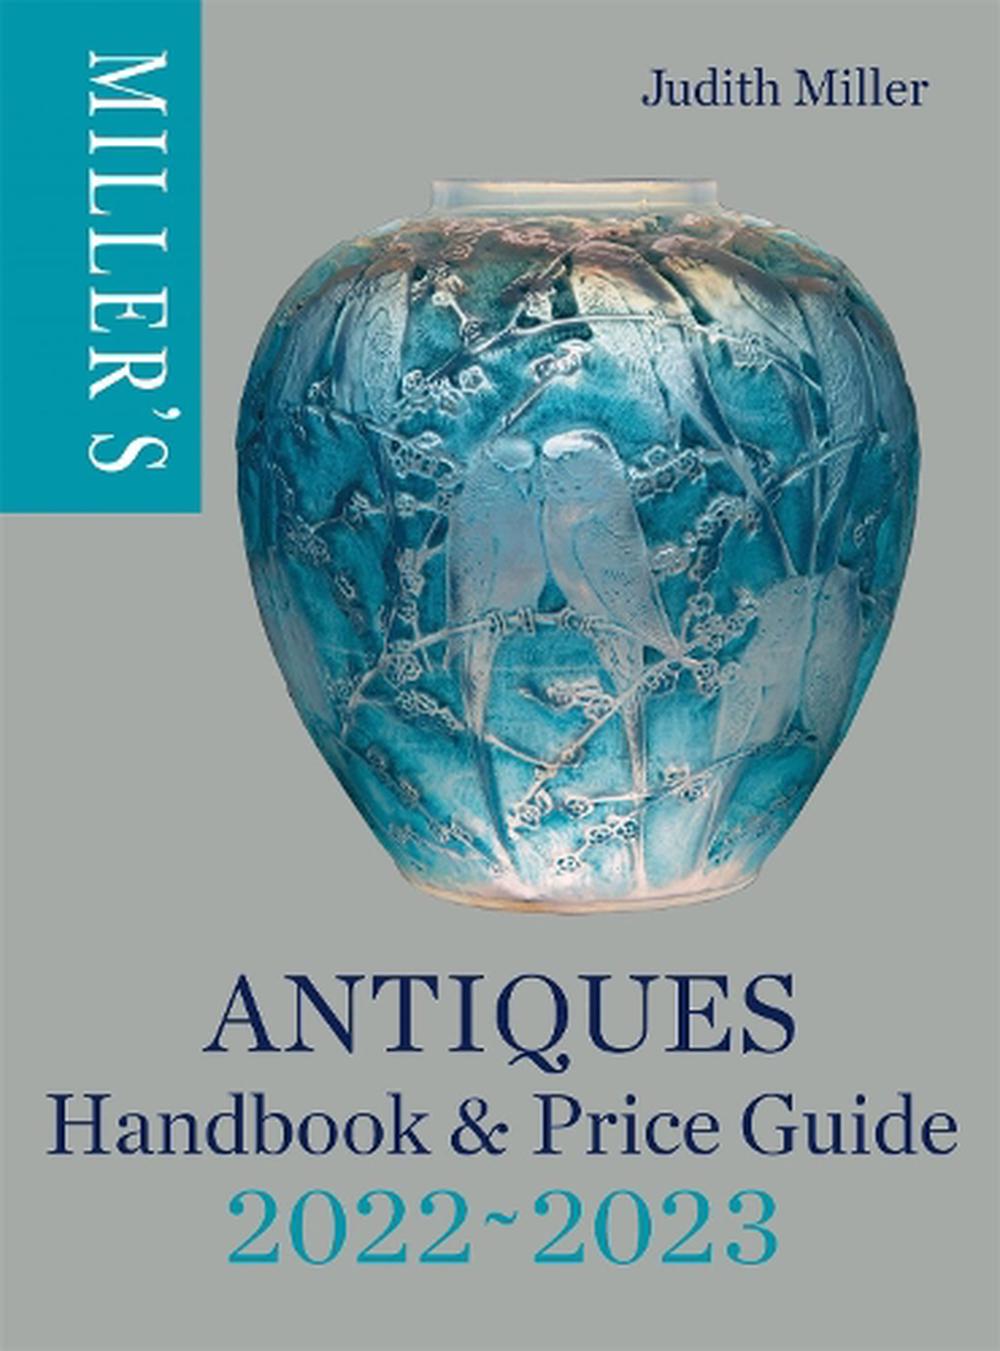 Miller's Antiques Handbook & Price Guide 20222023 by Judith Miller